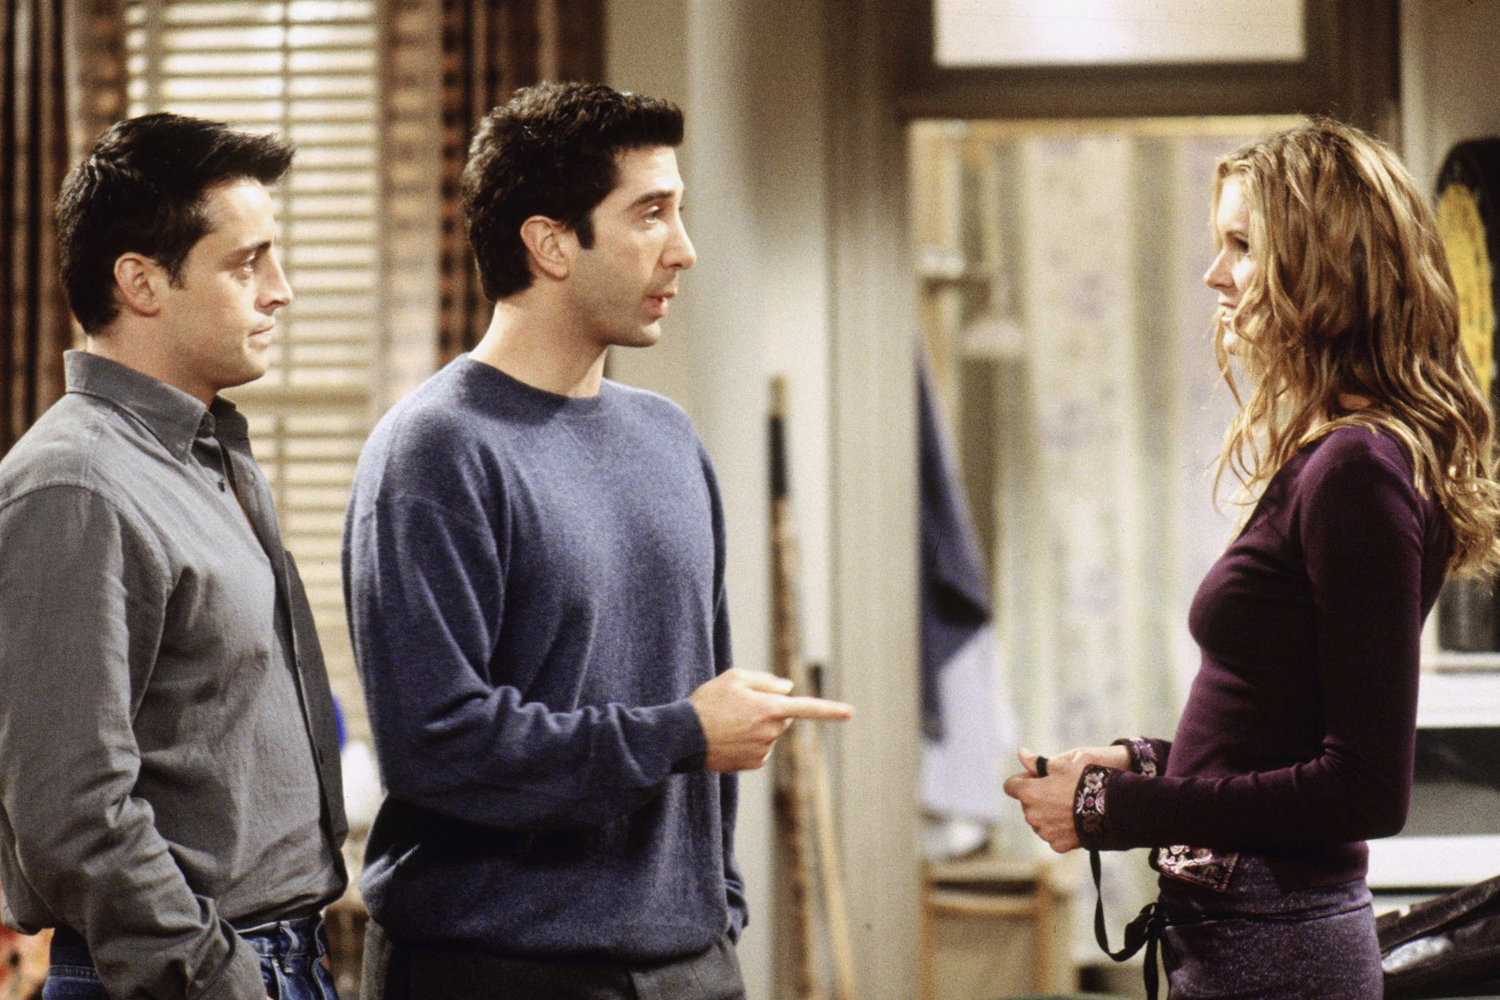 A nova colega de quarto de Joey, Janine Lecroix (Elle Macpherson), em cena de 'Friends'